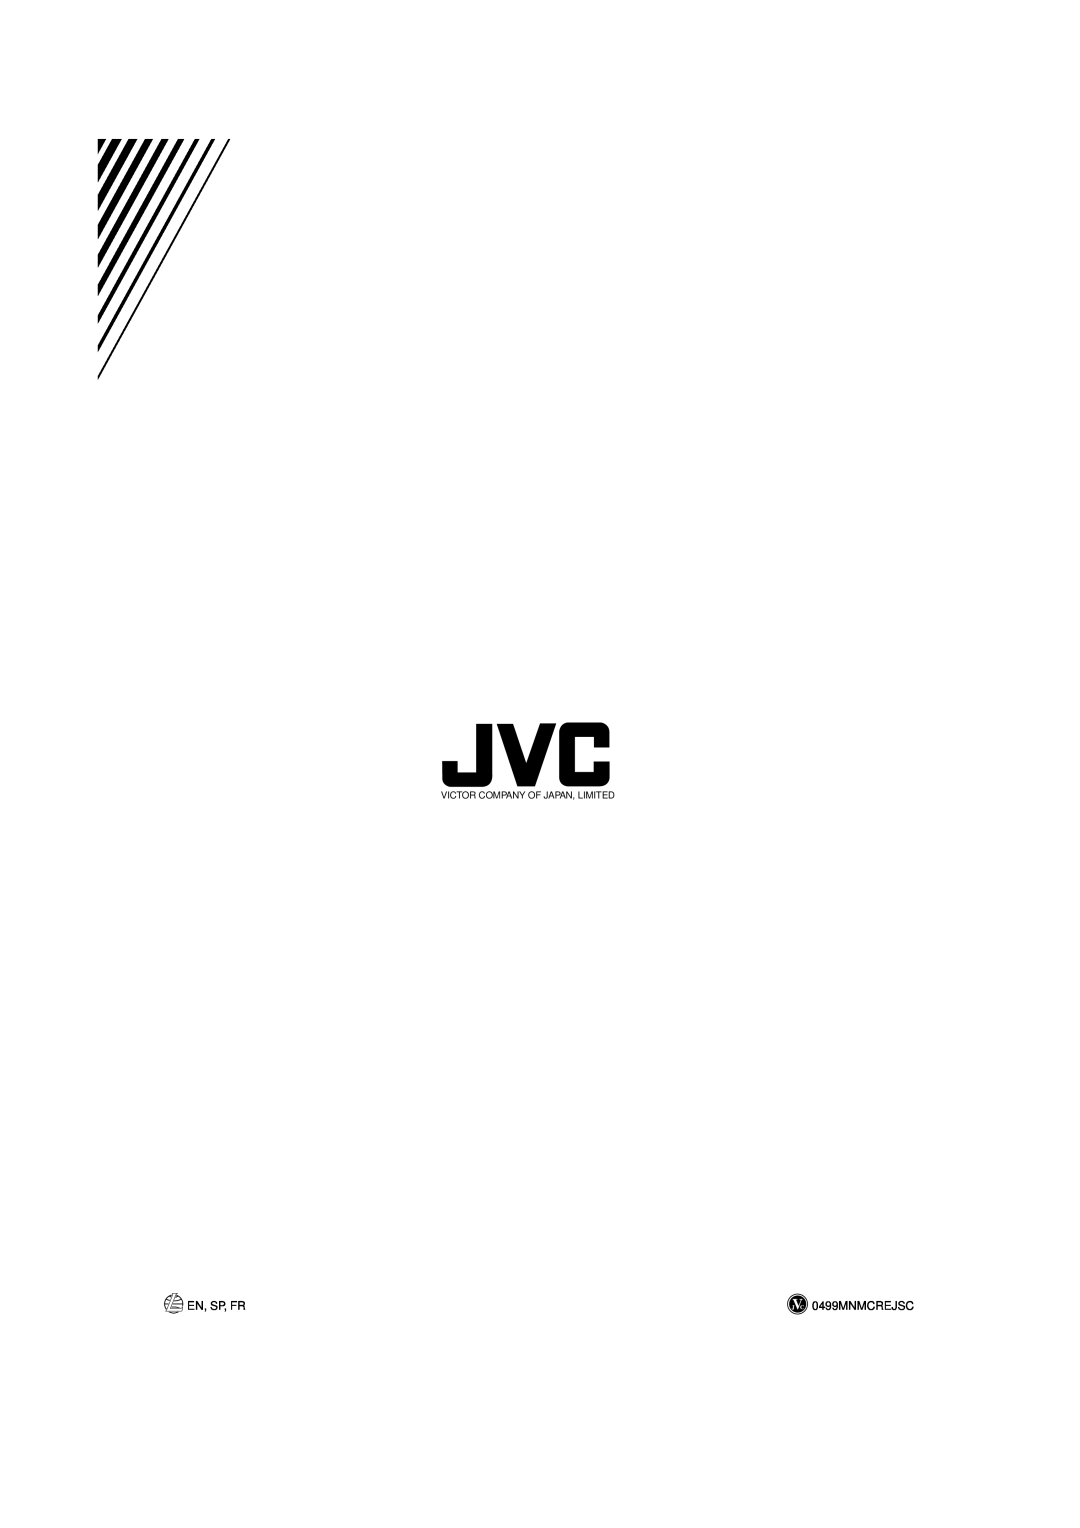 JVC FS-V5 manual En, Sp, Fr, 0499MNMCREJSC, Victor Company Of Japan, Limited 